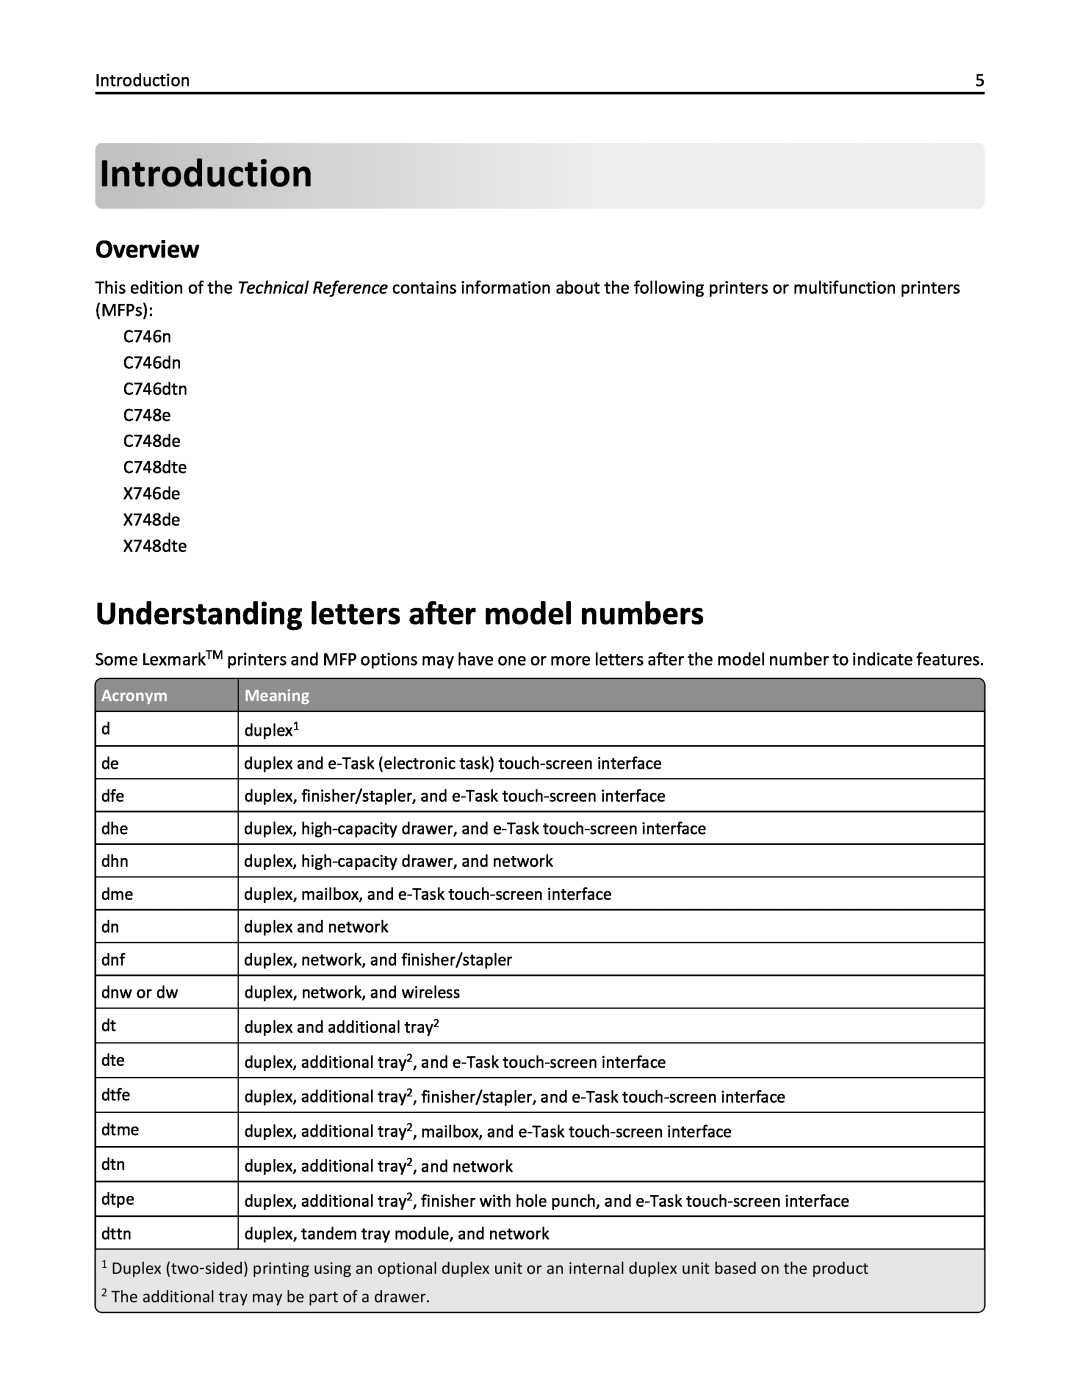 Lexmark 746dtn, 748dte, 748de, 746de, 746dn, 746n, 748e manual Introduction, Understanding letters after model numbers, Overview 